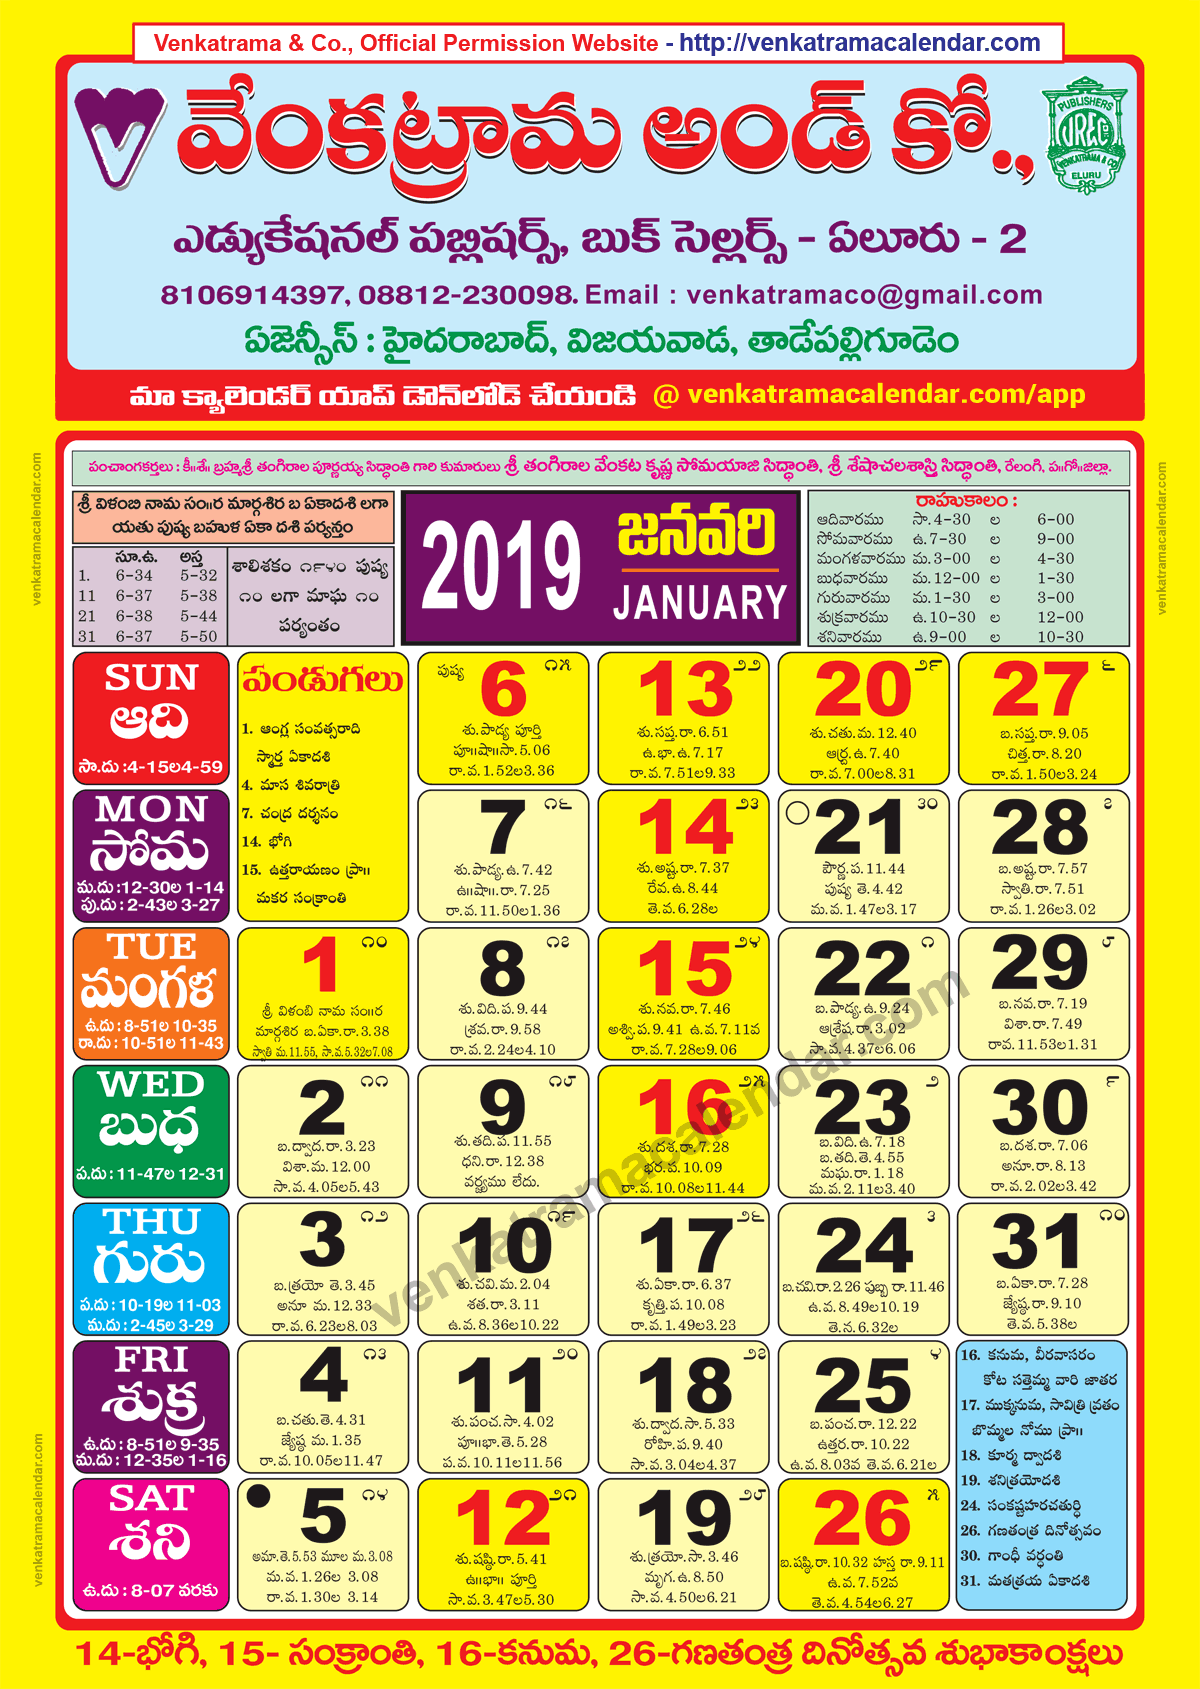 venkatrama-co-2019-january-telugu-calendar-colour